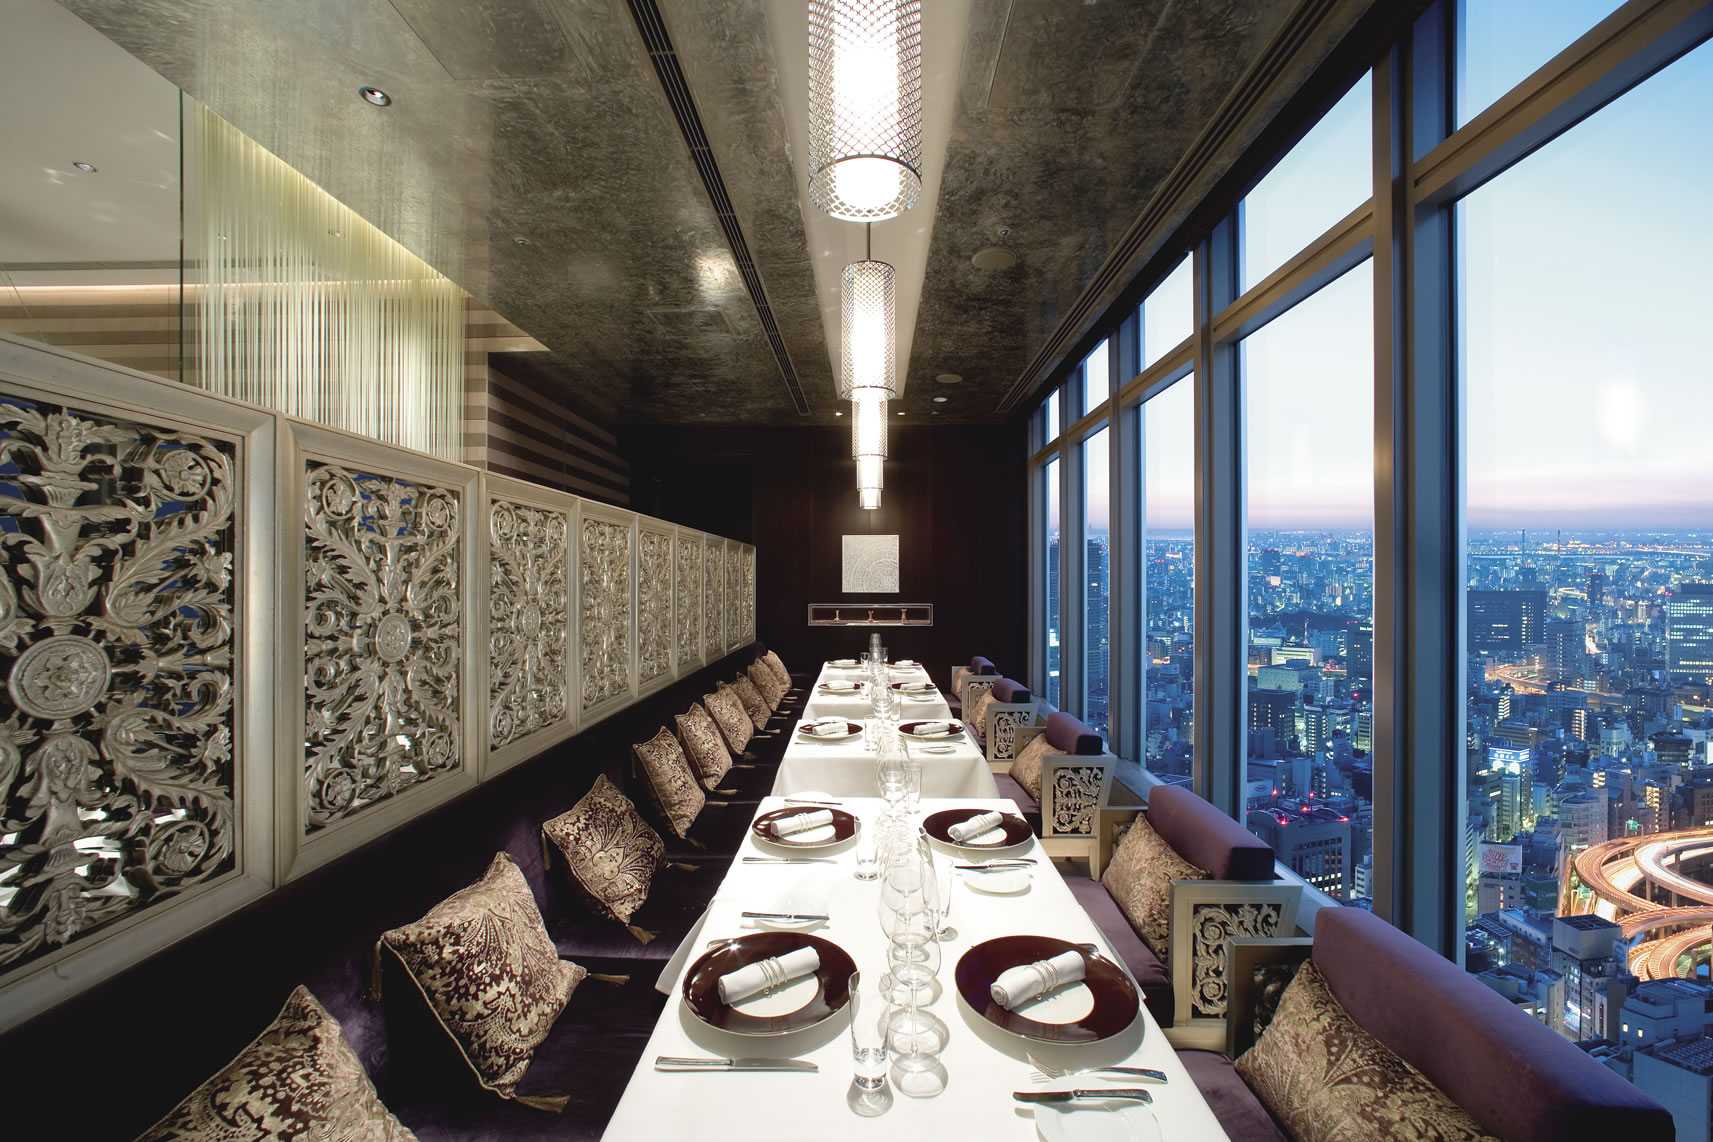 Mandarin Oriental Tokyo’s “La Table De Rosanjin” promises to be a meal